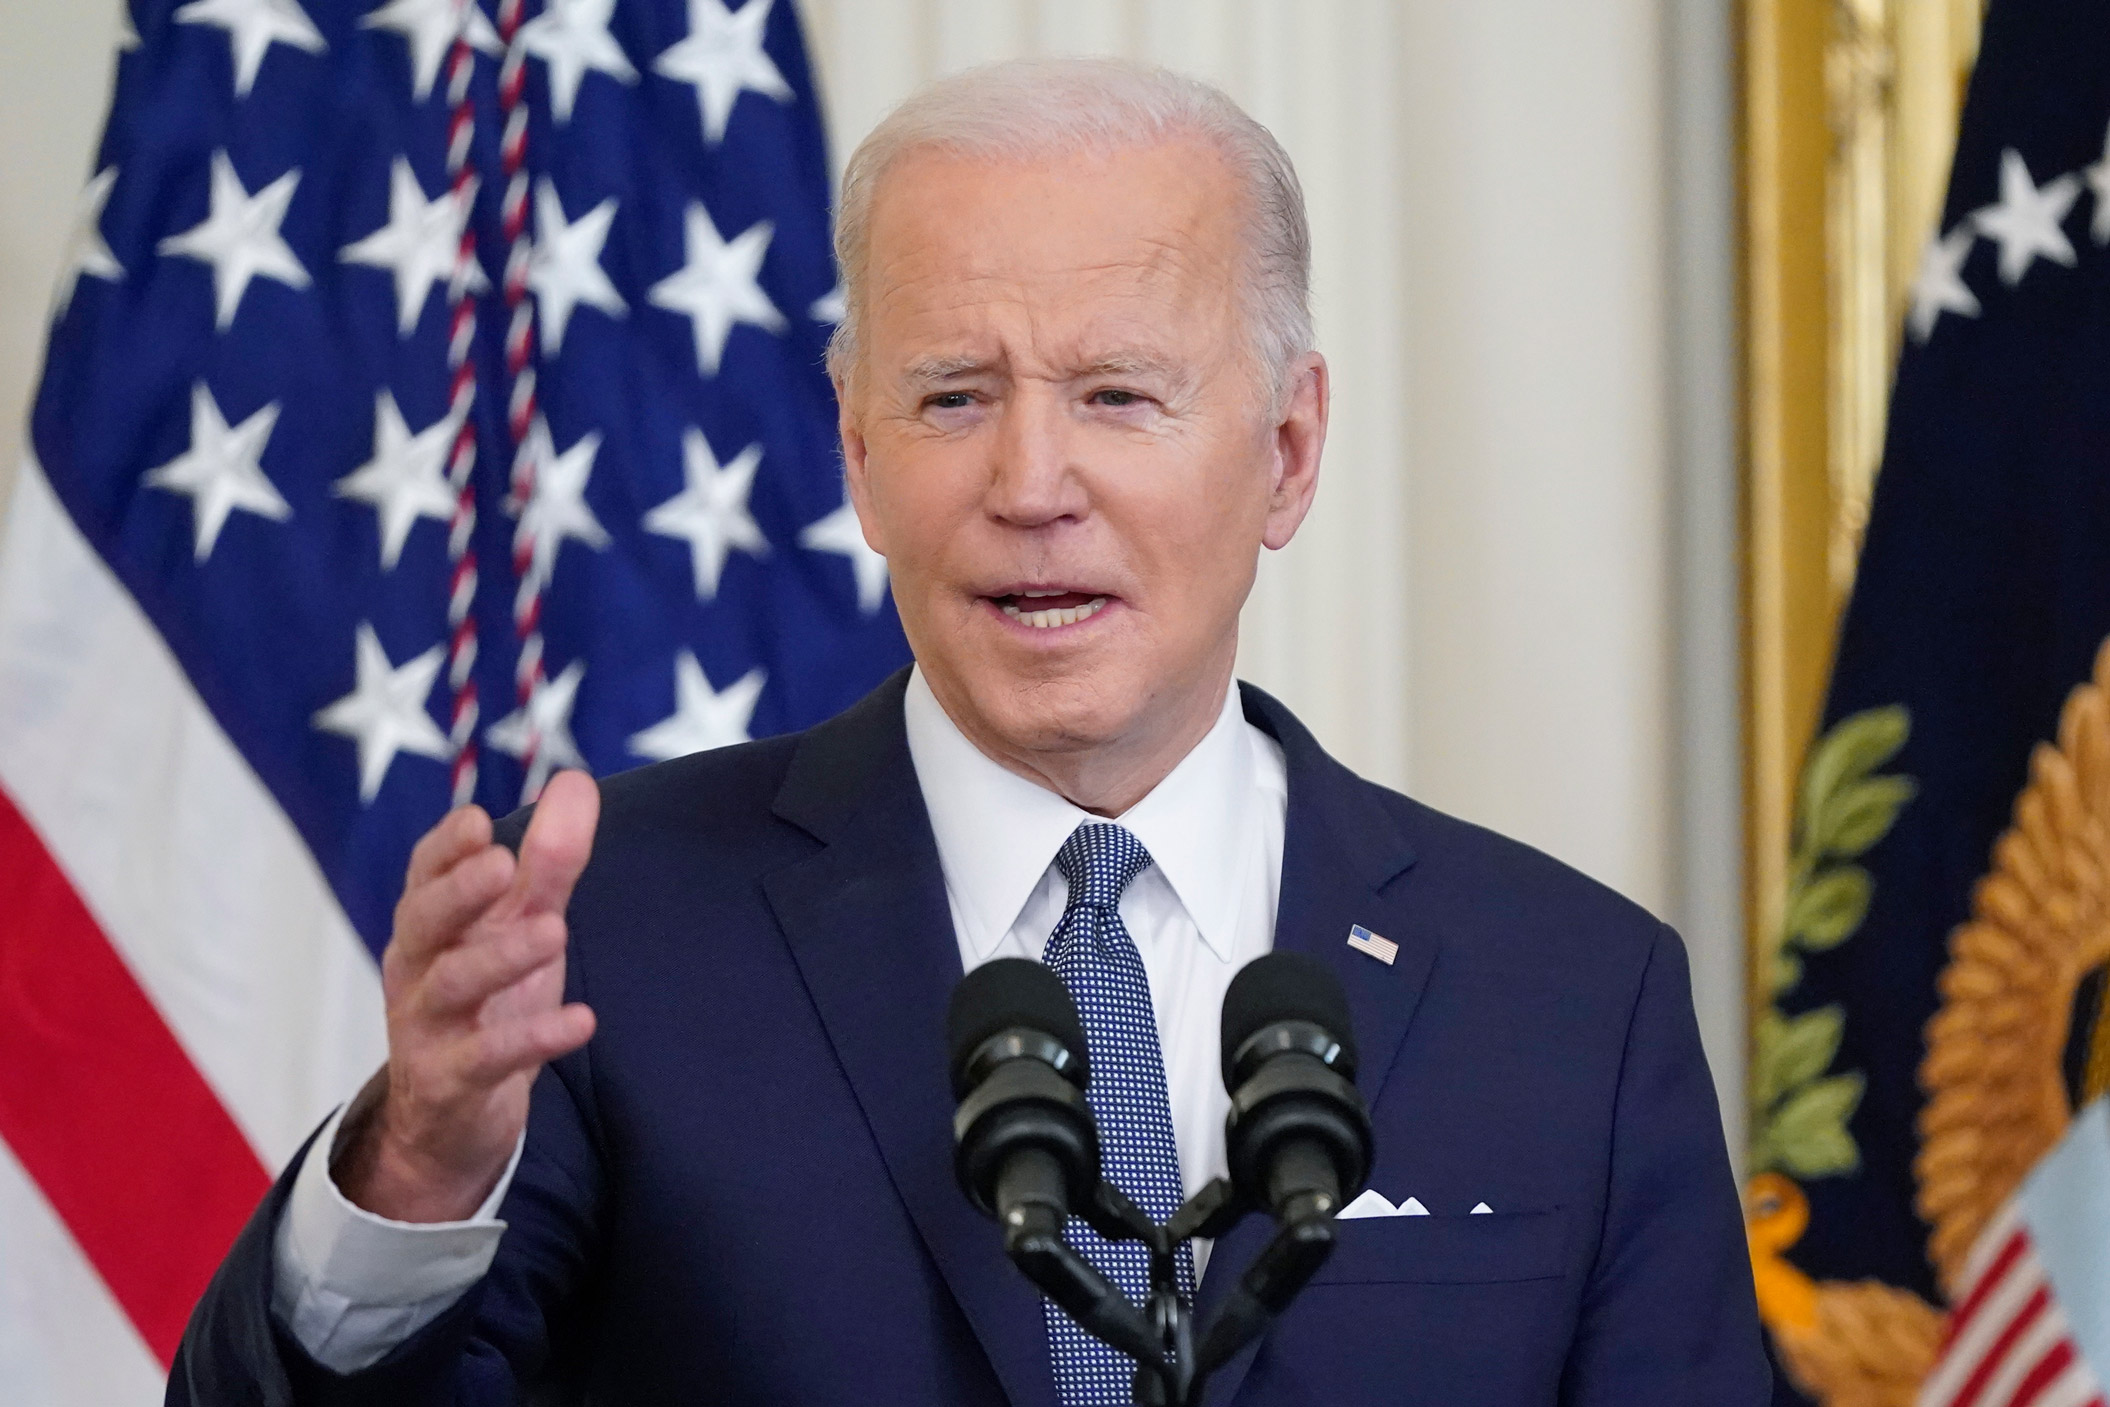 Analysis: Joe Biden addresses an anxious world at SOTU as Putin makes  nuclear threats | CNN Politics